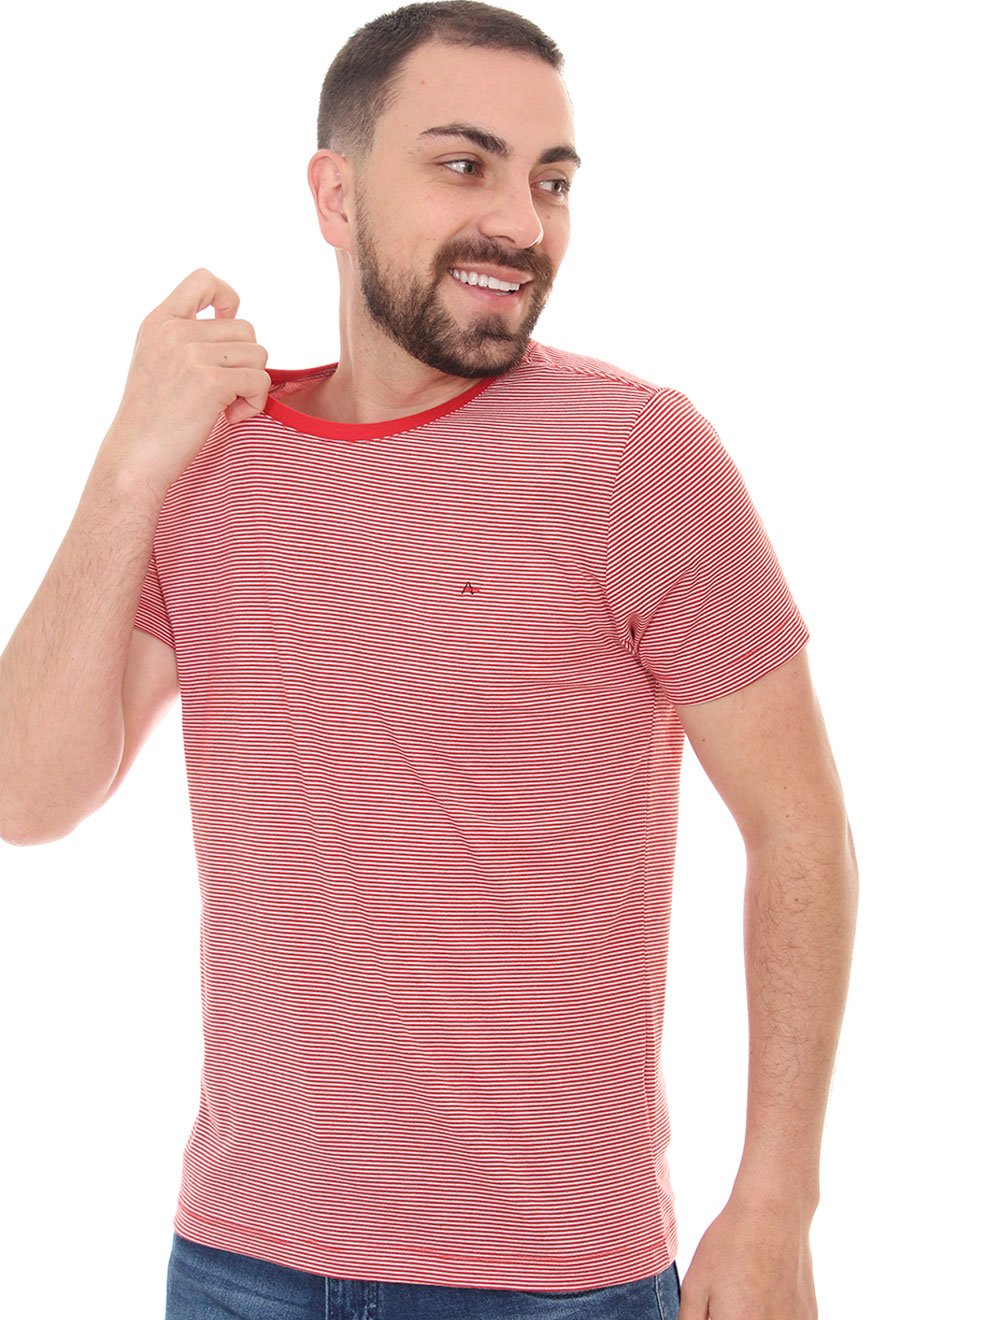 Camiseta Aramis Masculina Meia Malha Listrada Vermelha